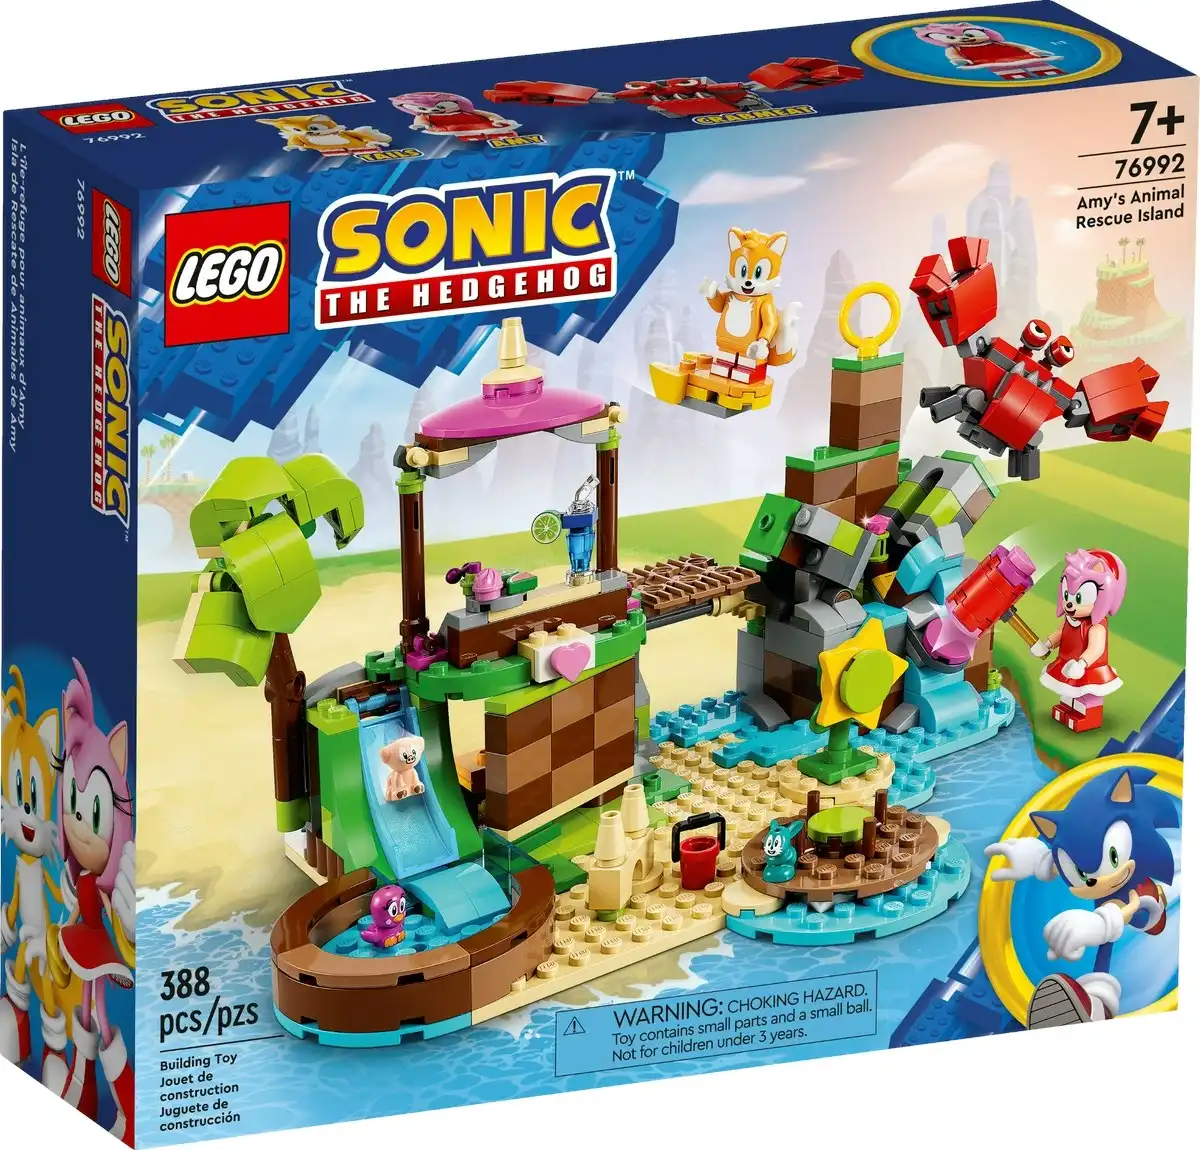 LEGO 76992 Amy's Animal Rescue Island - Sonic the Hedgehog